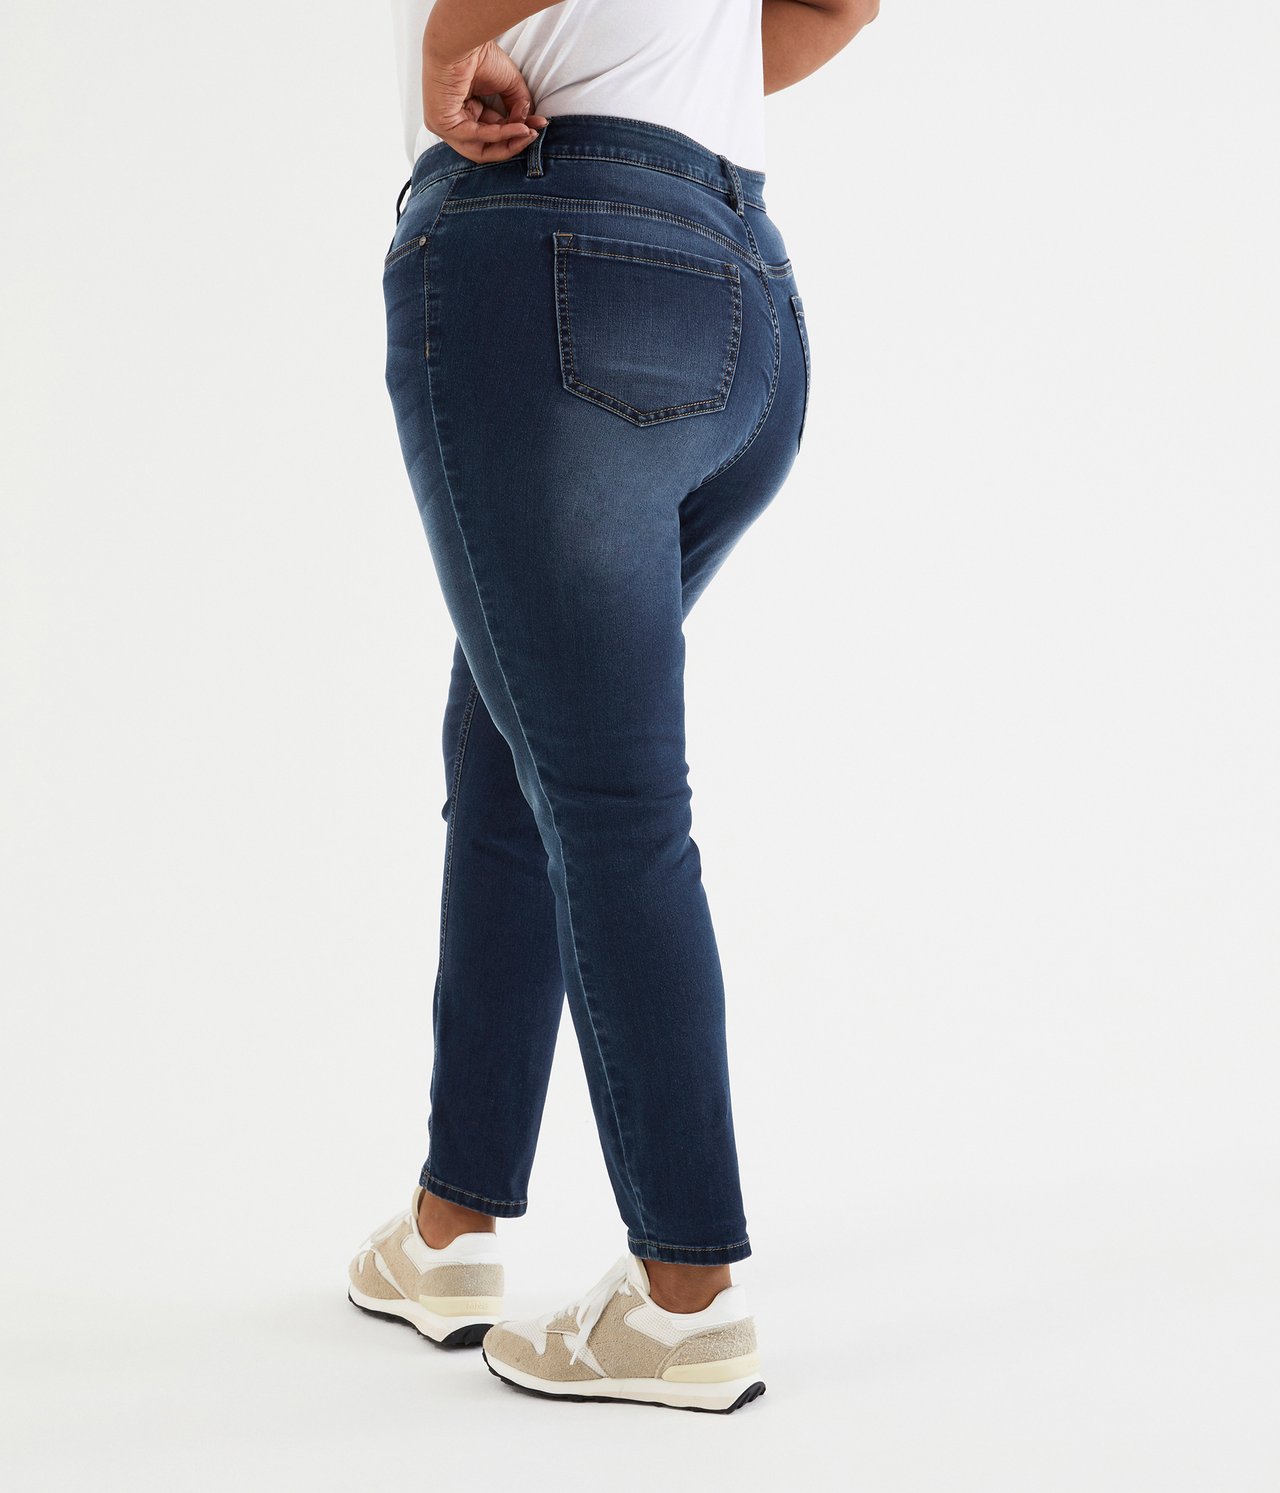 Ebba slim jeans - Mörk denim - 182cm / Storlek: 50 - 4